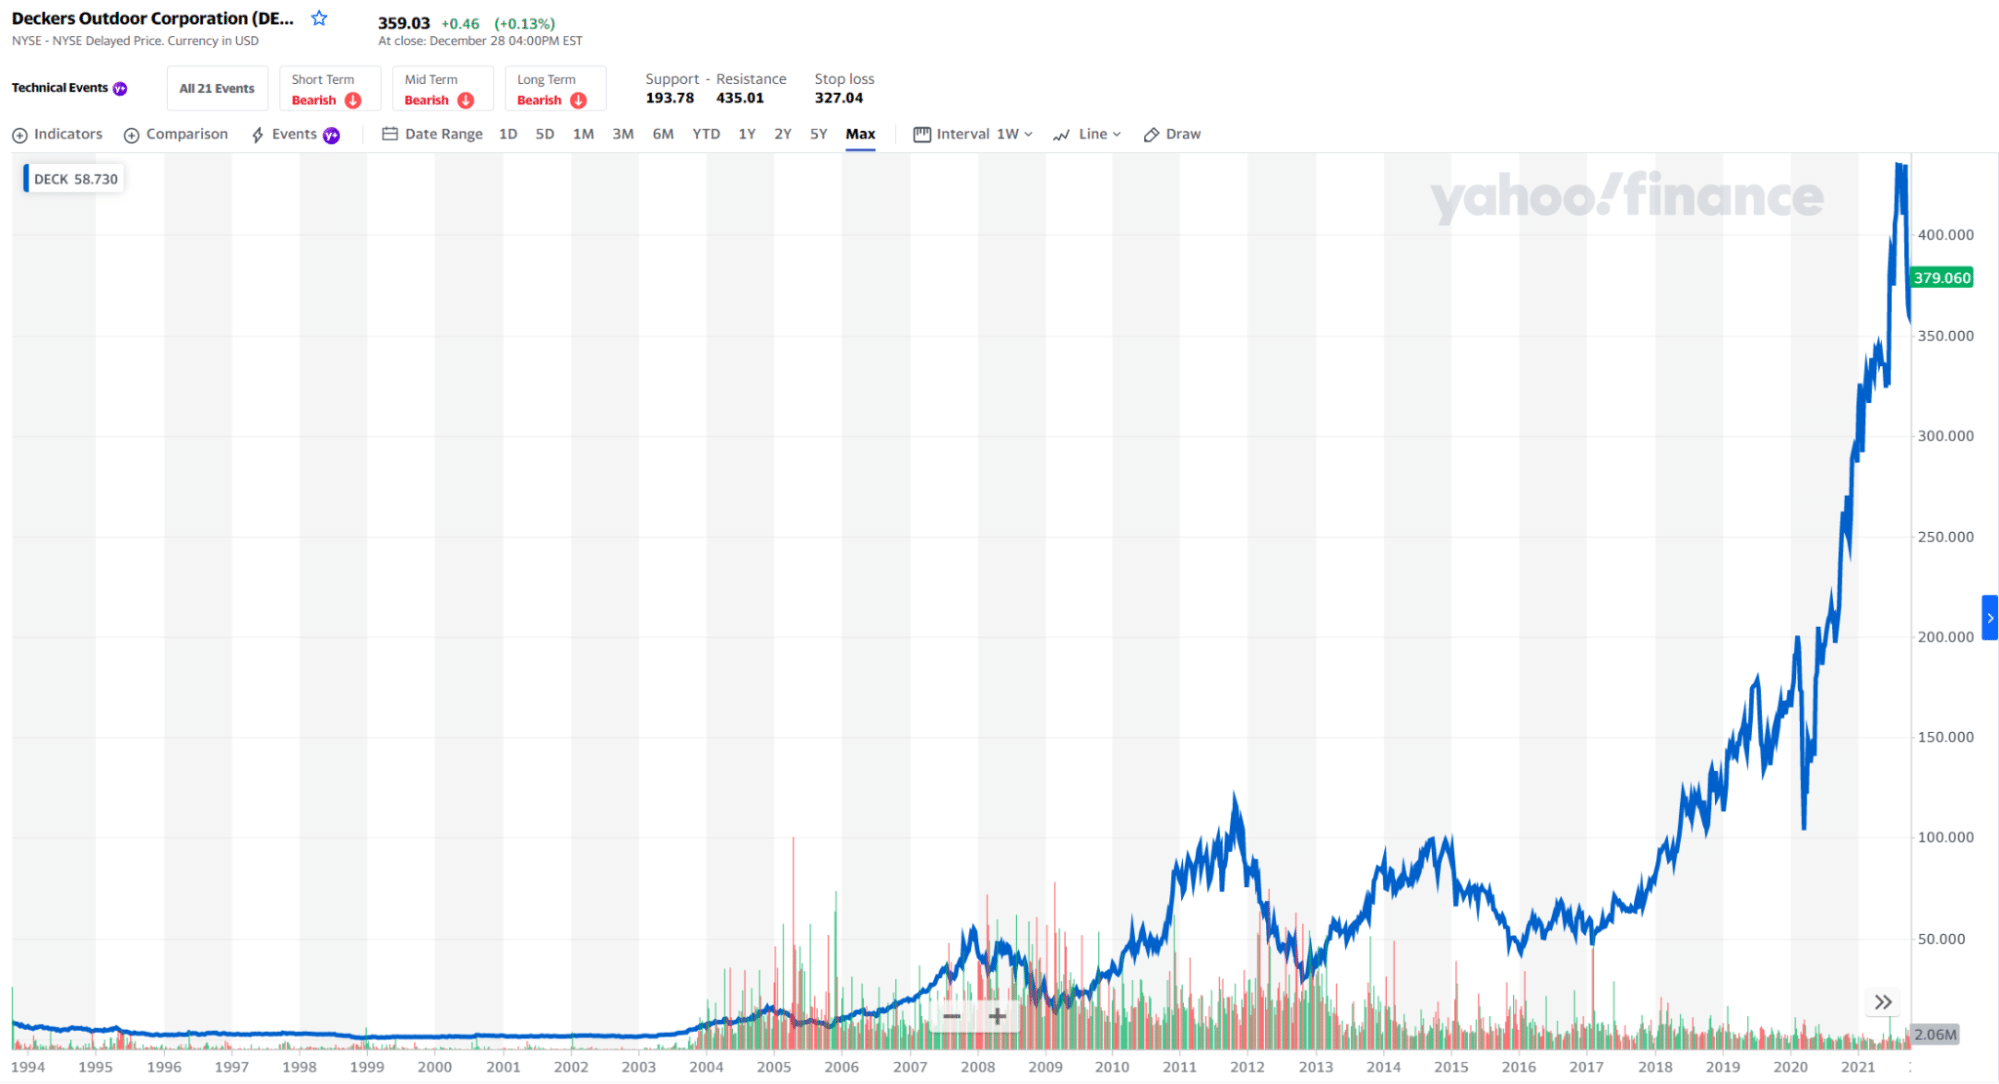 DECK stock price chart 1994-2021